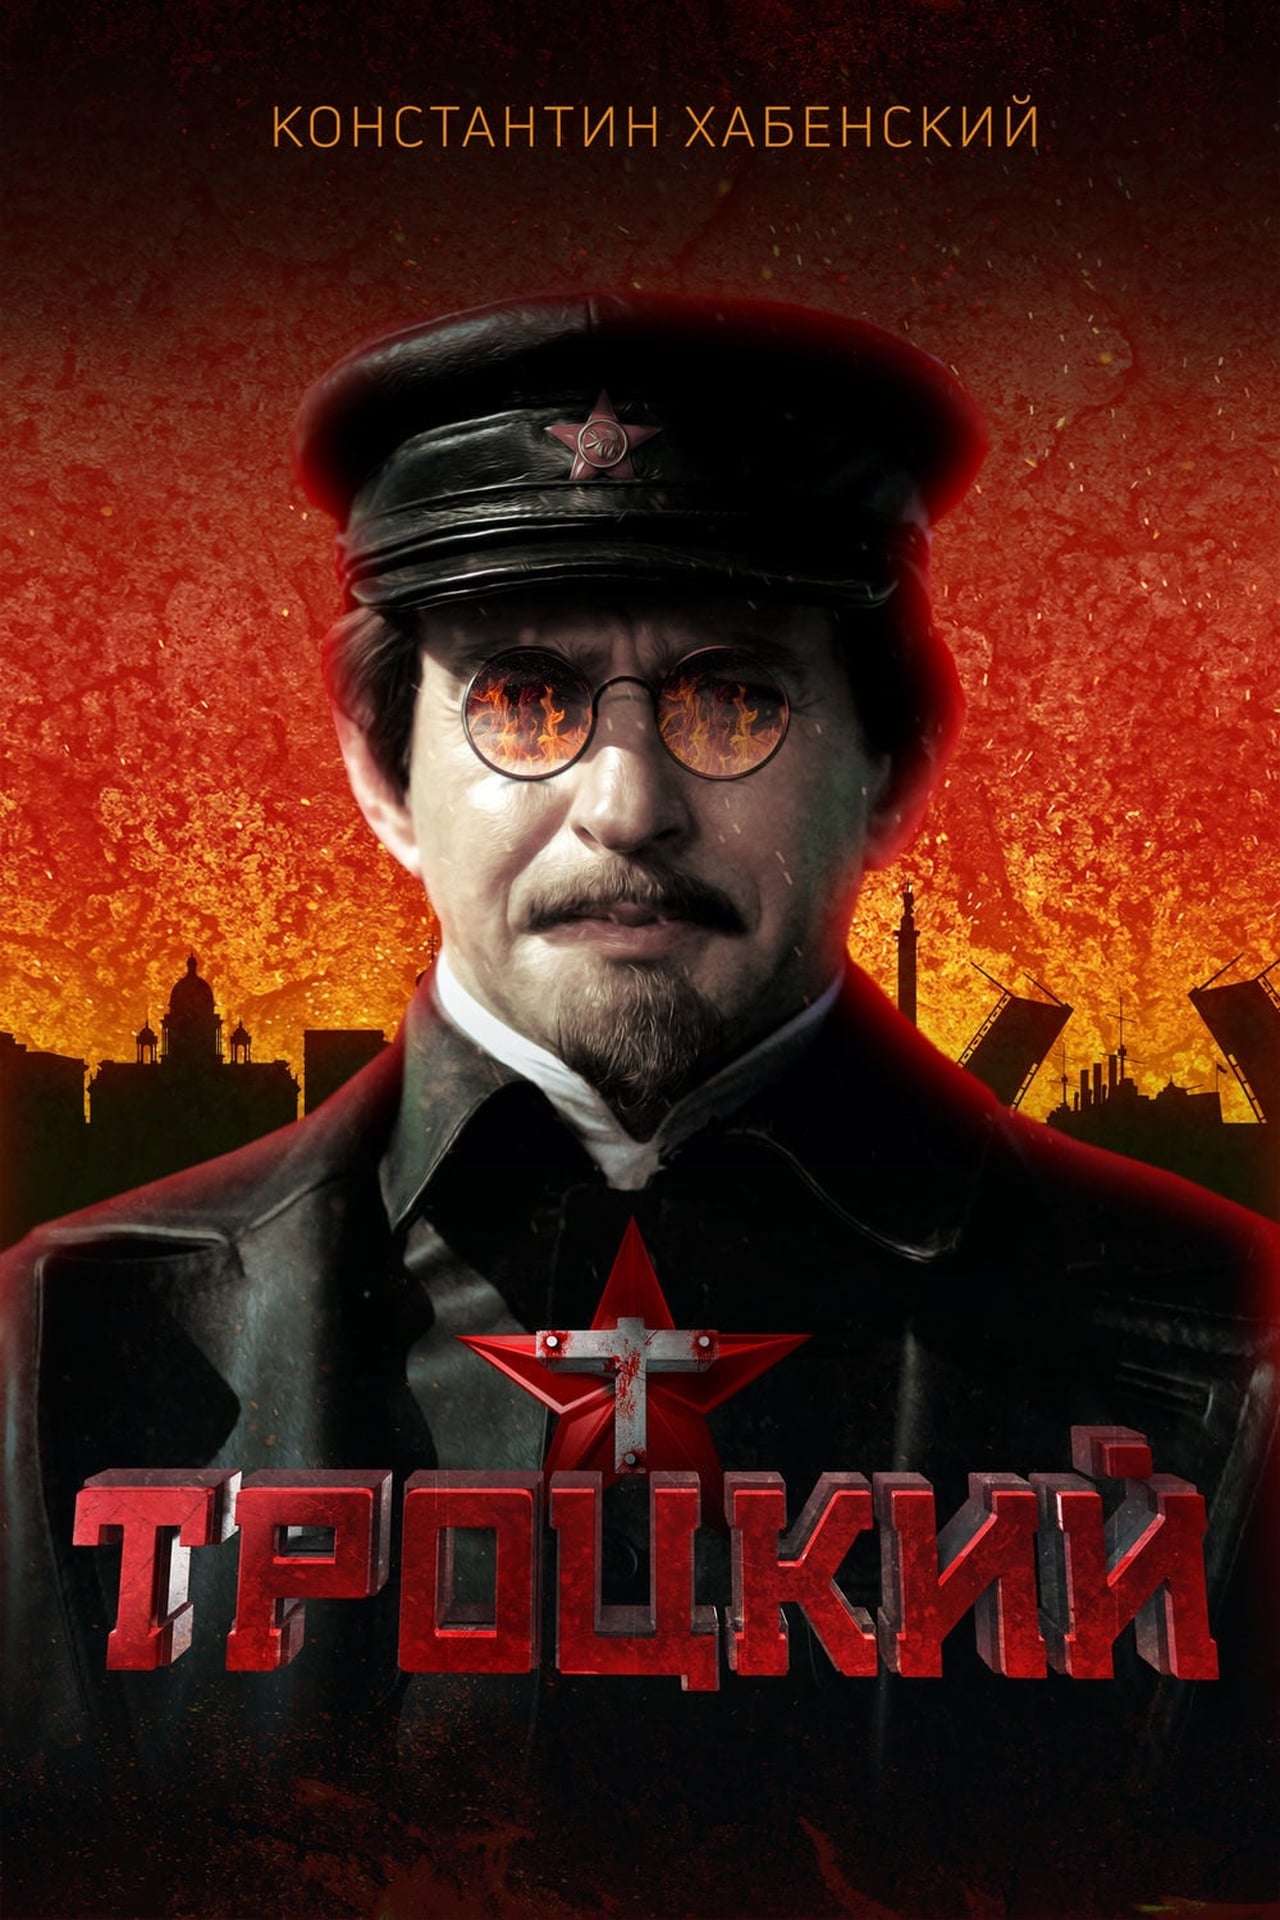 Trotsky Season 1